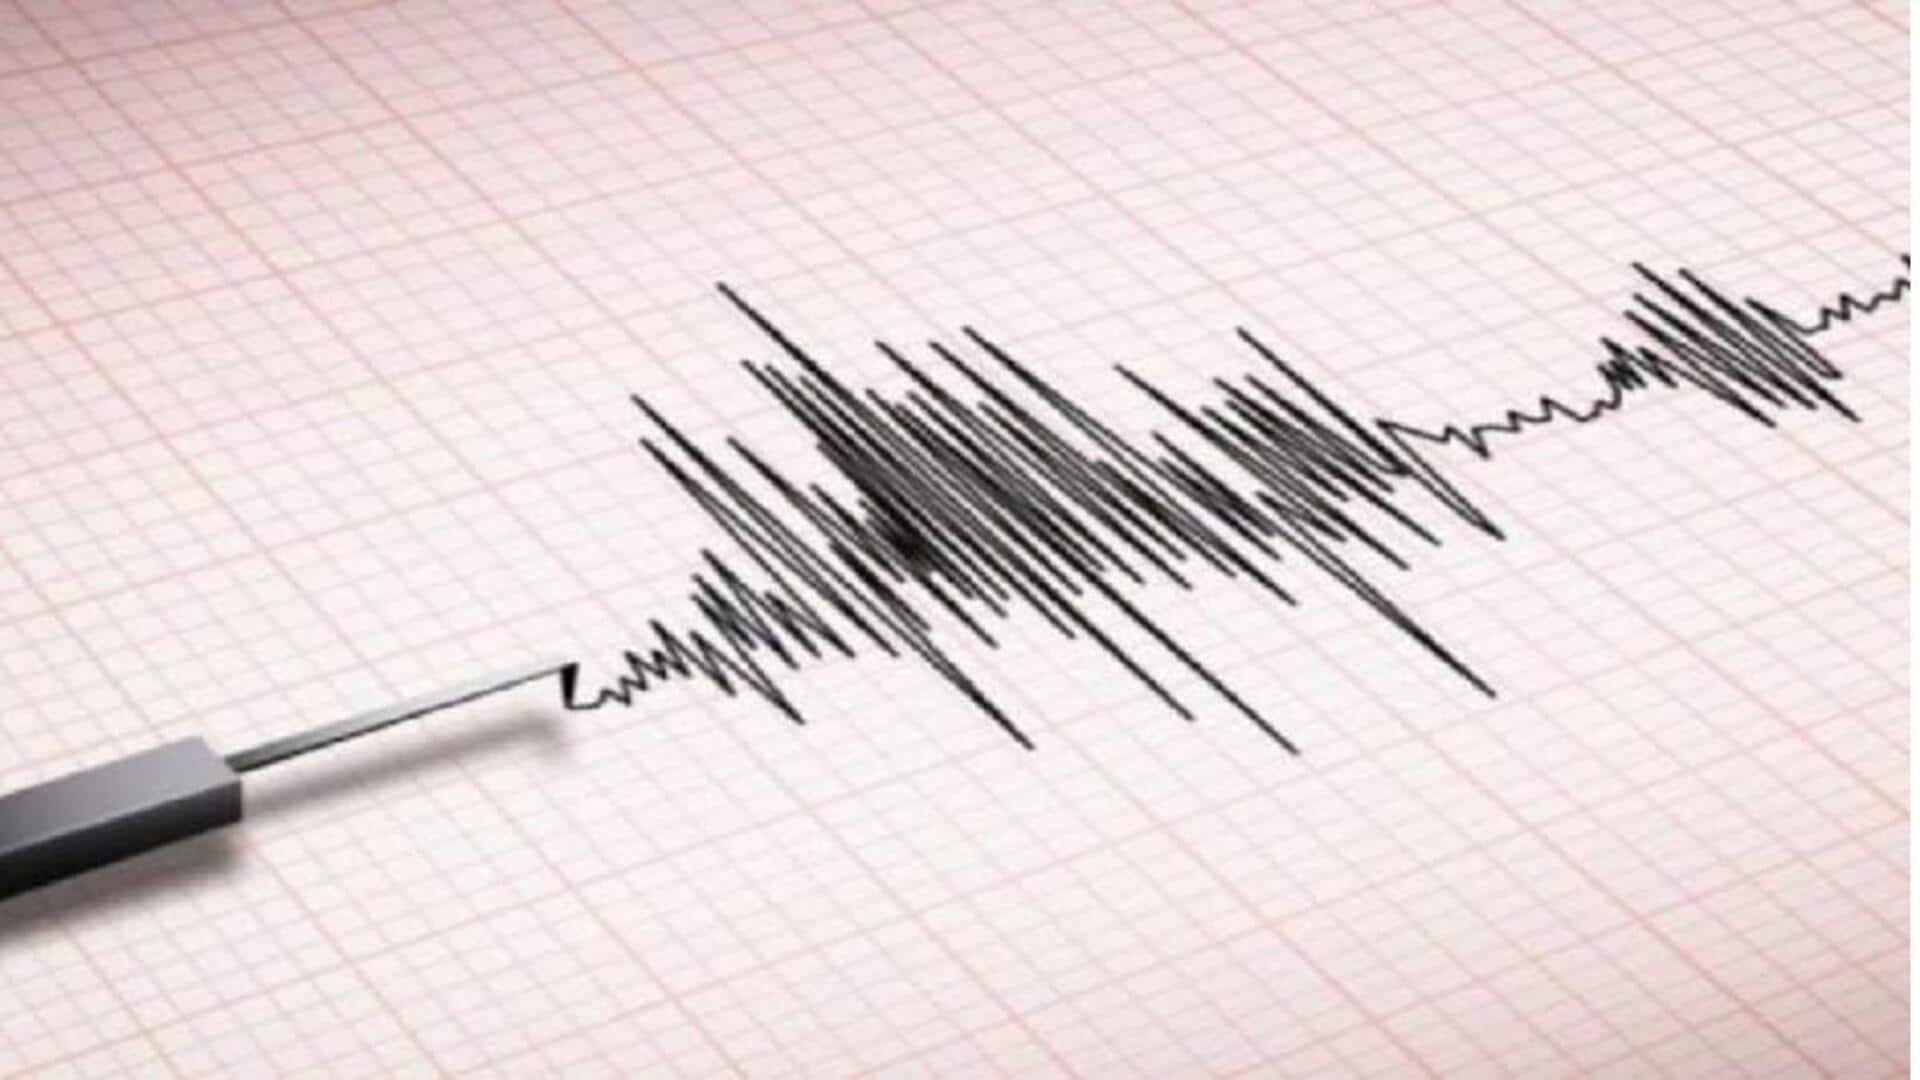 Earthquake: ఆఫ్ఘనిస్తాన్‌లో 5.2 తీవ్రతతో భూకంపం